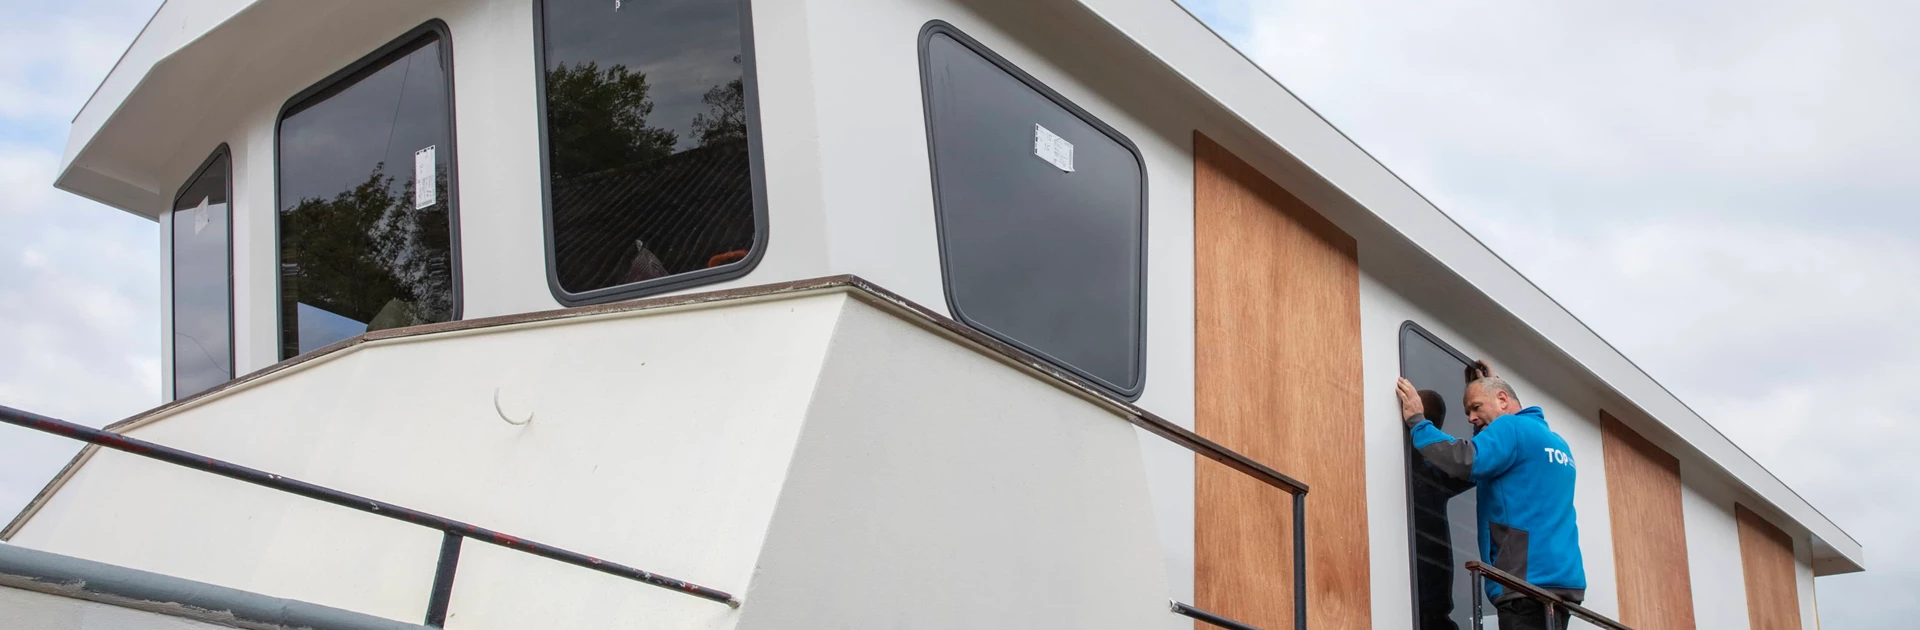 Fenster an Bord eines Hausbootes